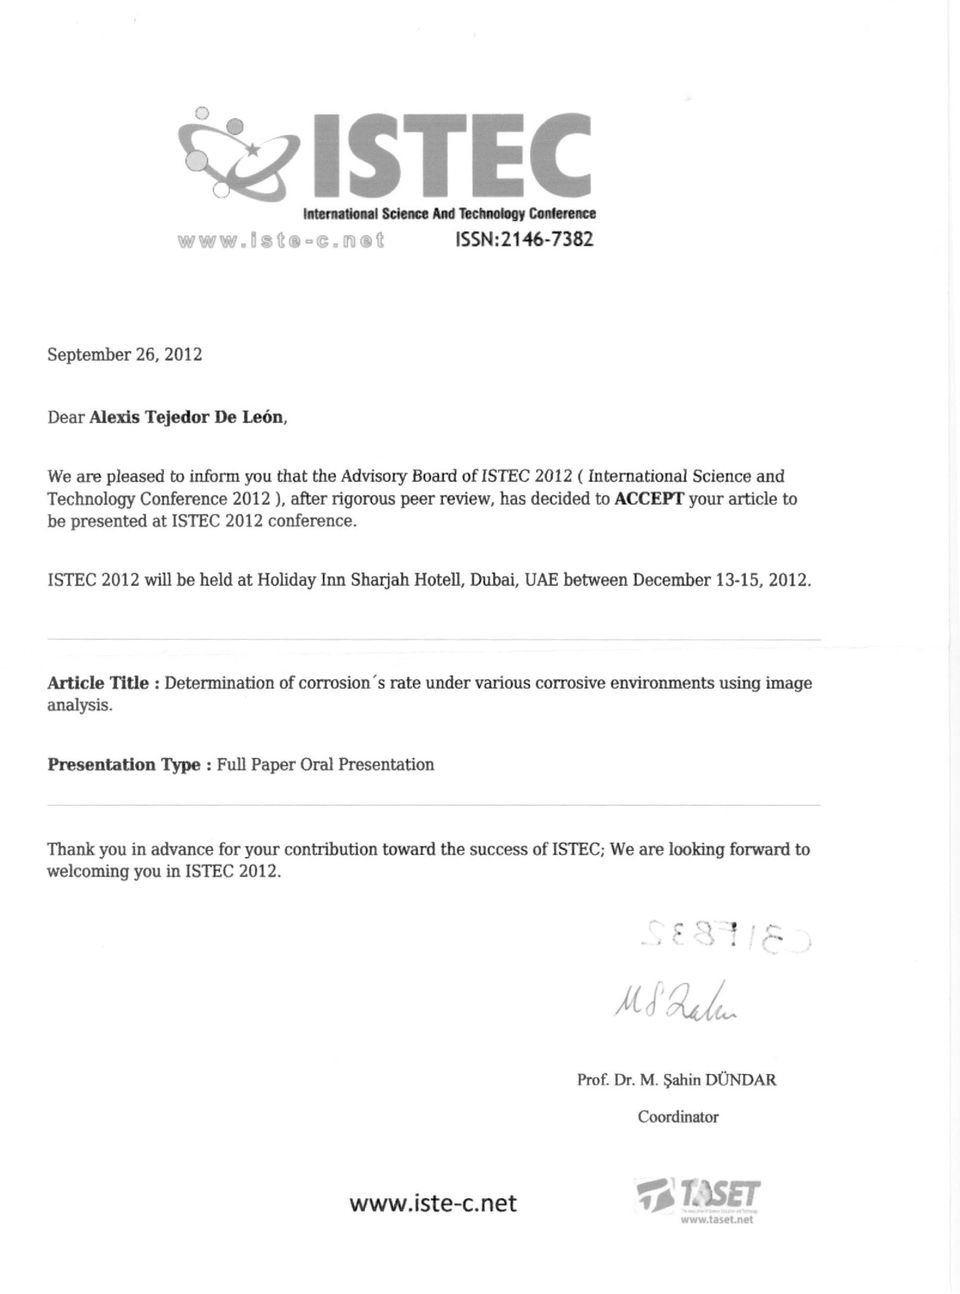 ISTEC 2012 will be held at Holiday Inn Sharjah Hotell, Dubai, UAE between December 13-15, 2012.